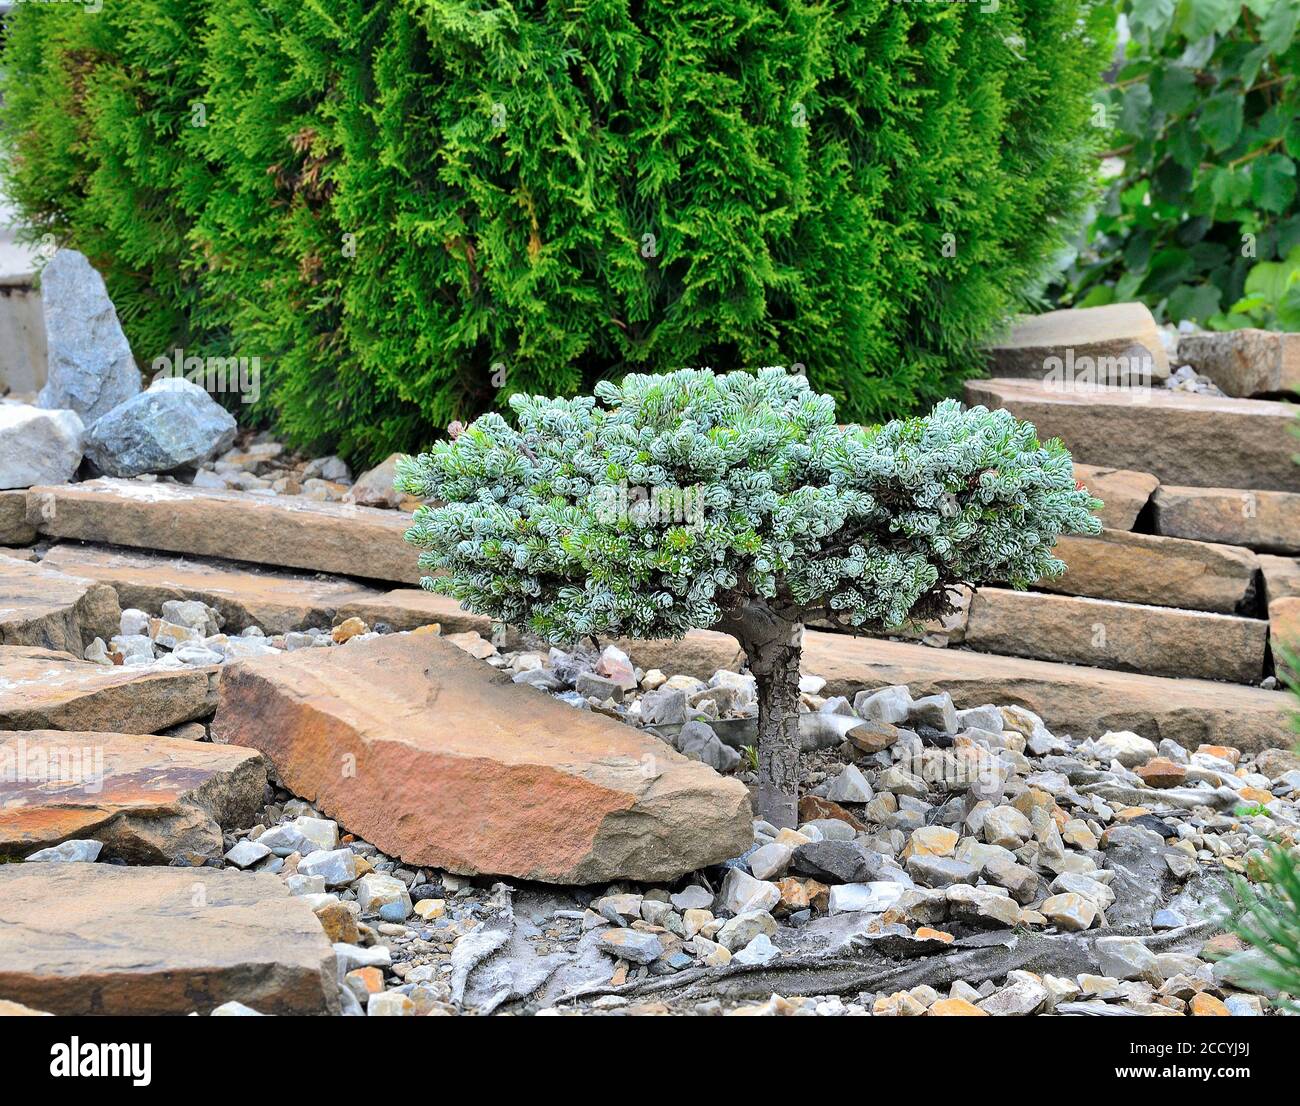 Dwarf sempreverde pianta di conifere Coreano Fir 'Kohouts Icebreaker' (Abies koreana) in pietra giardino paesaggio. Rara cultivar con aghi curvi in argento. Foto Stock